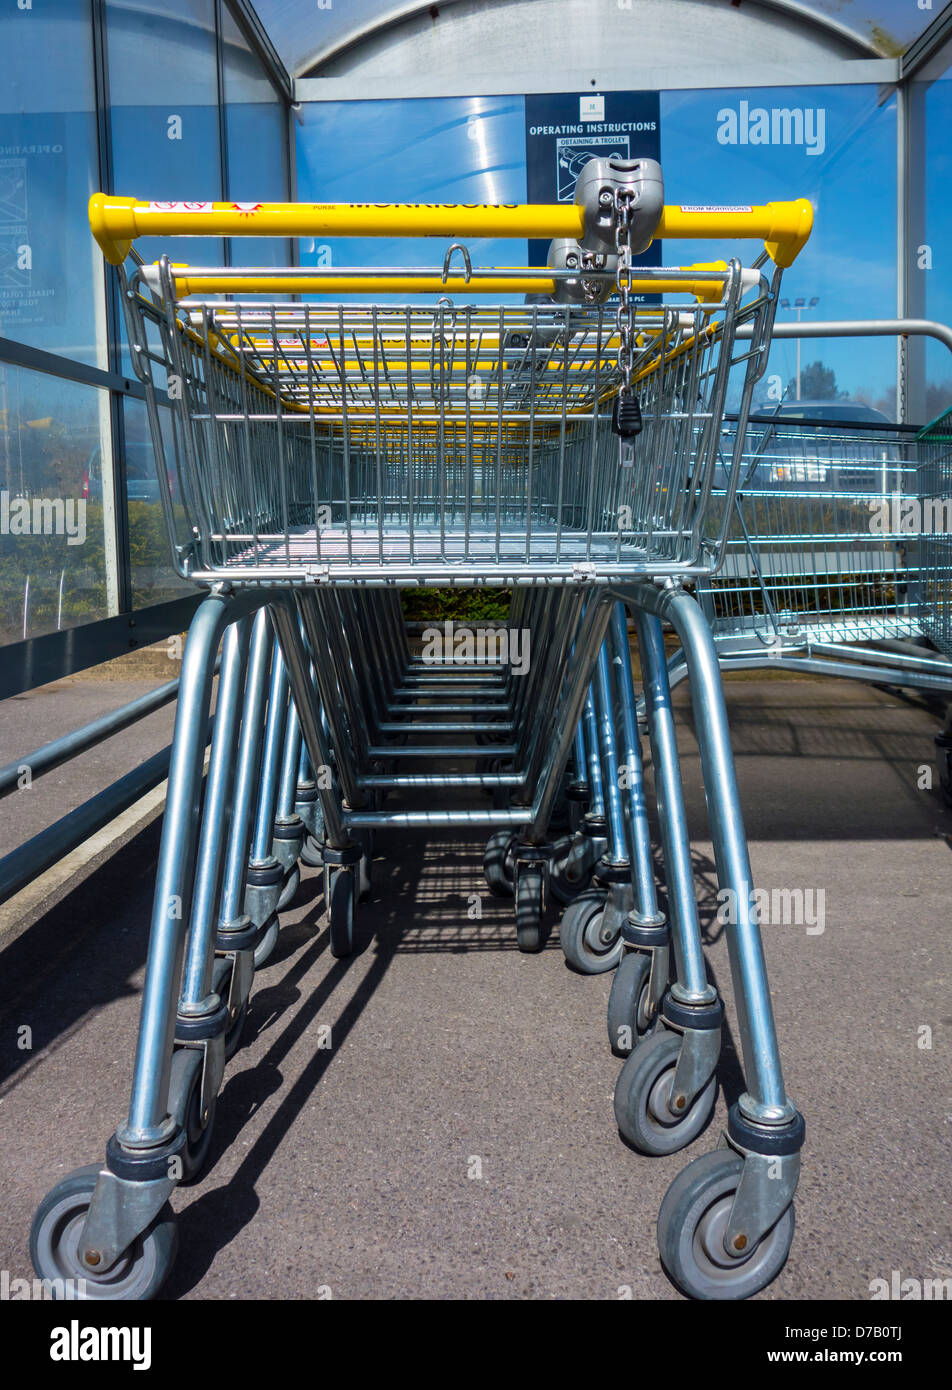 Shopping trolleys Stock Photo